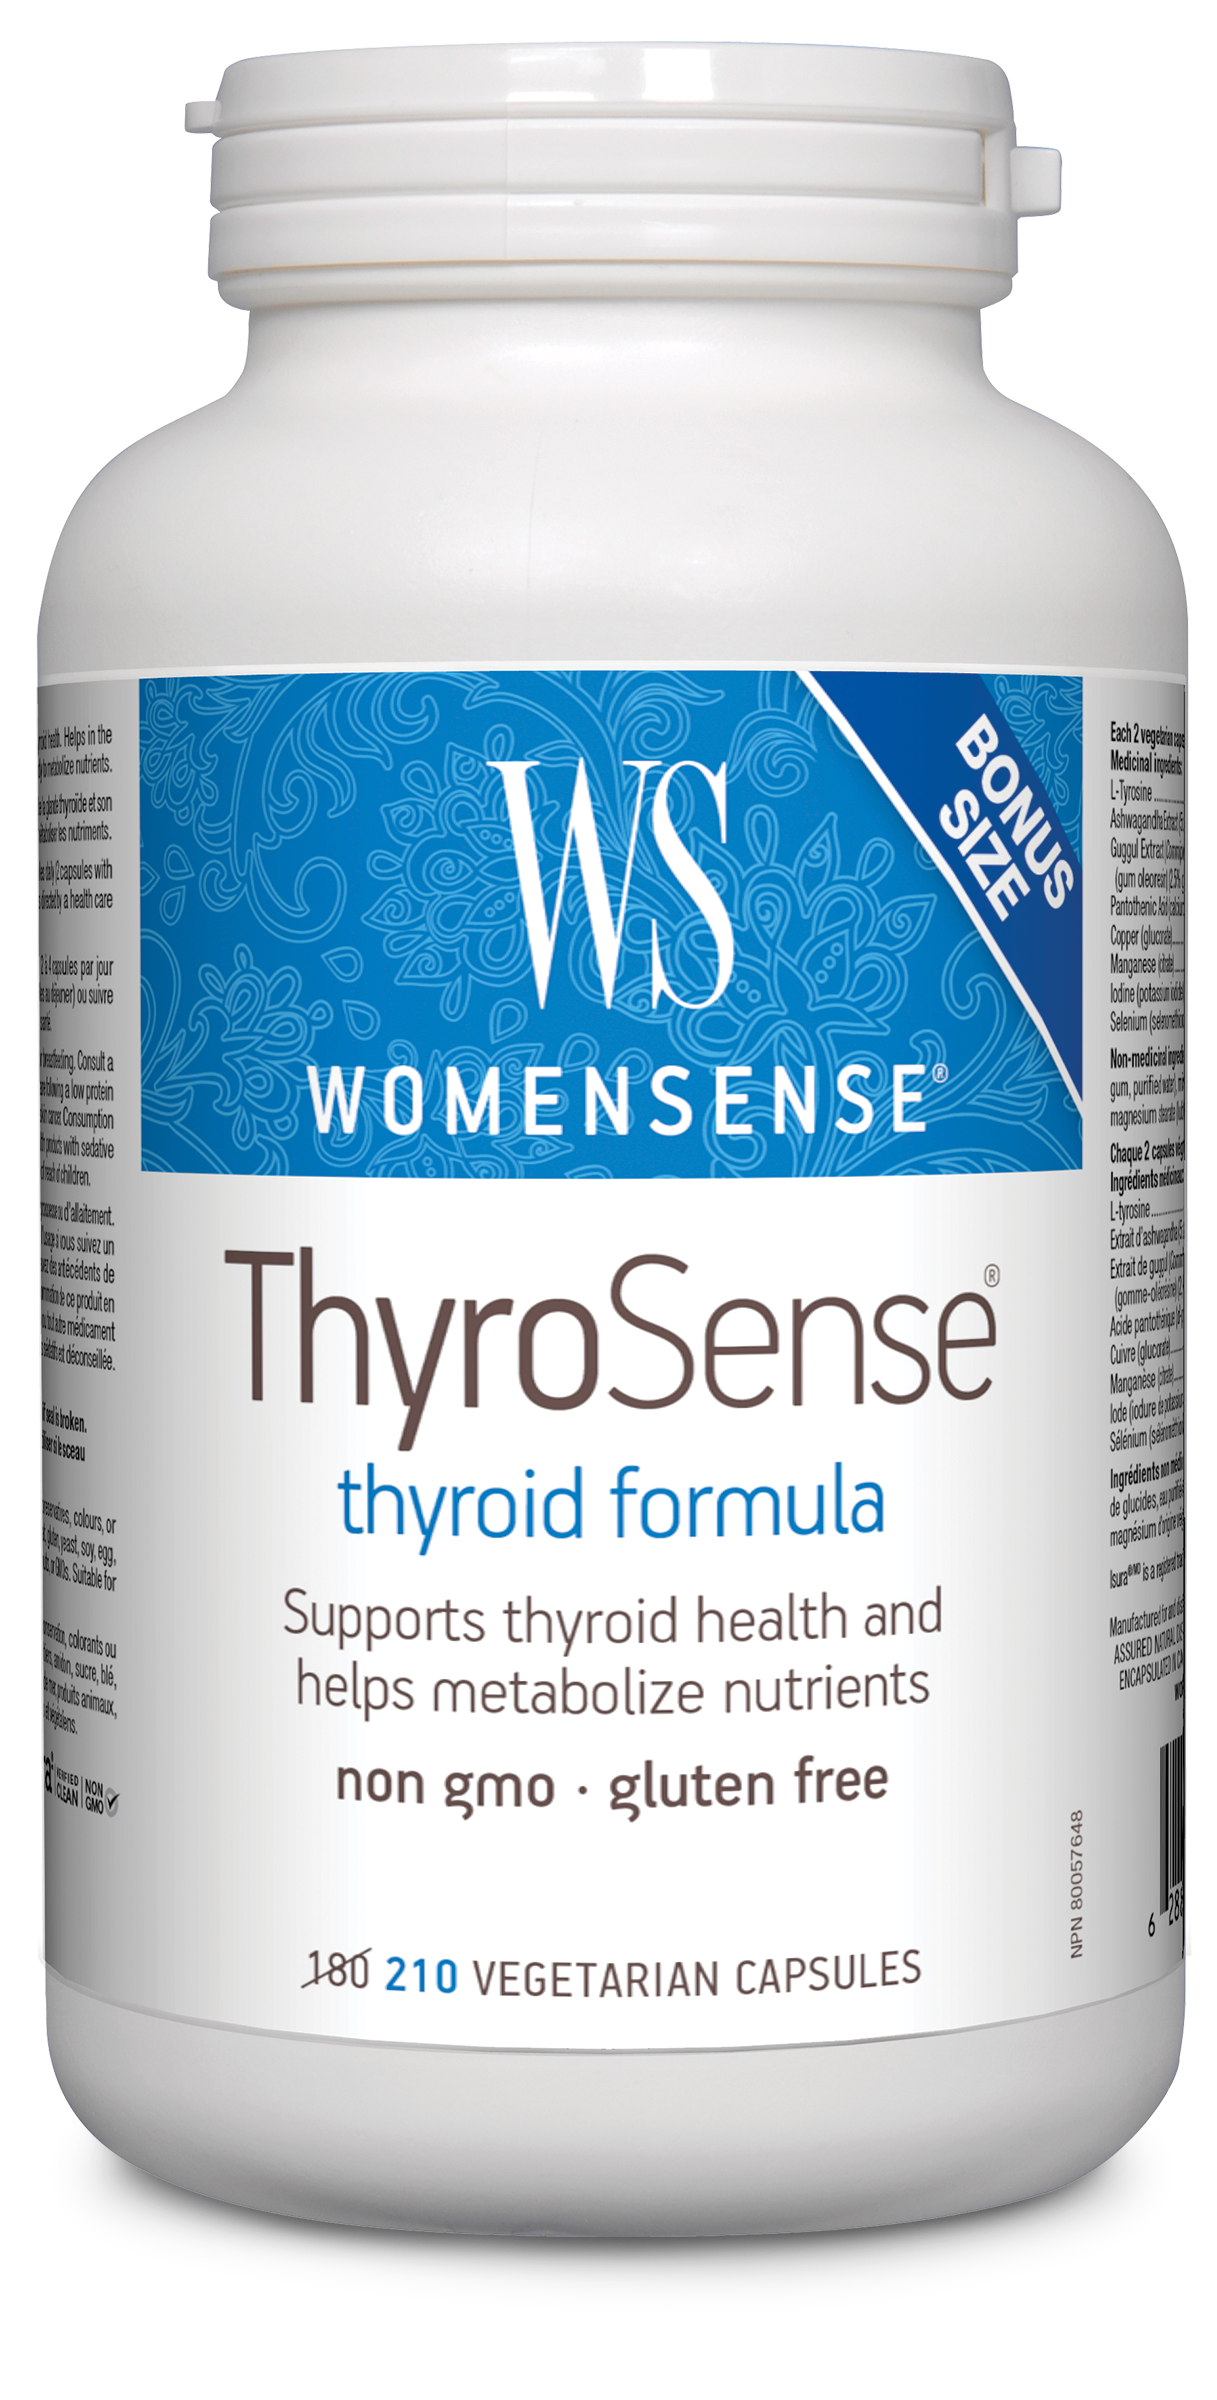 Womensense Thyrosense